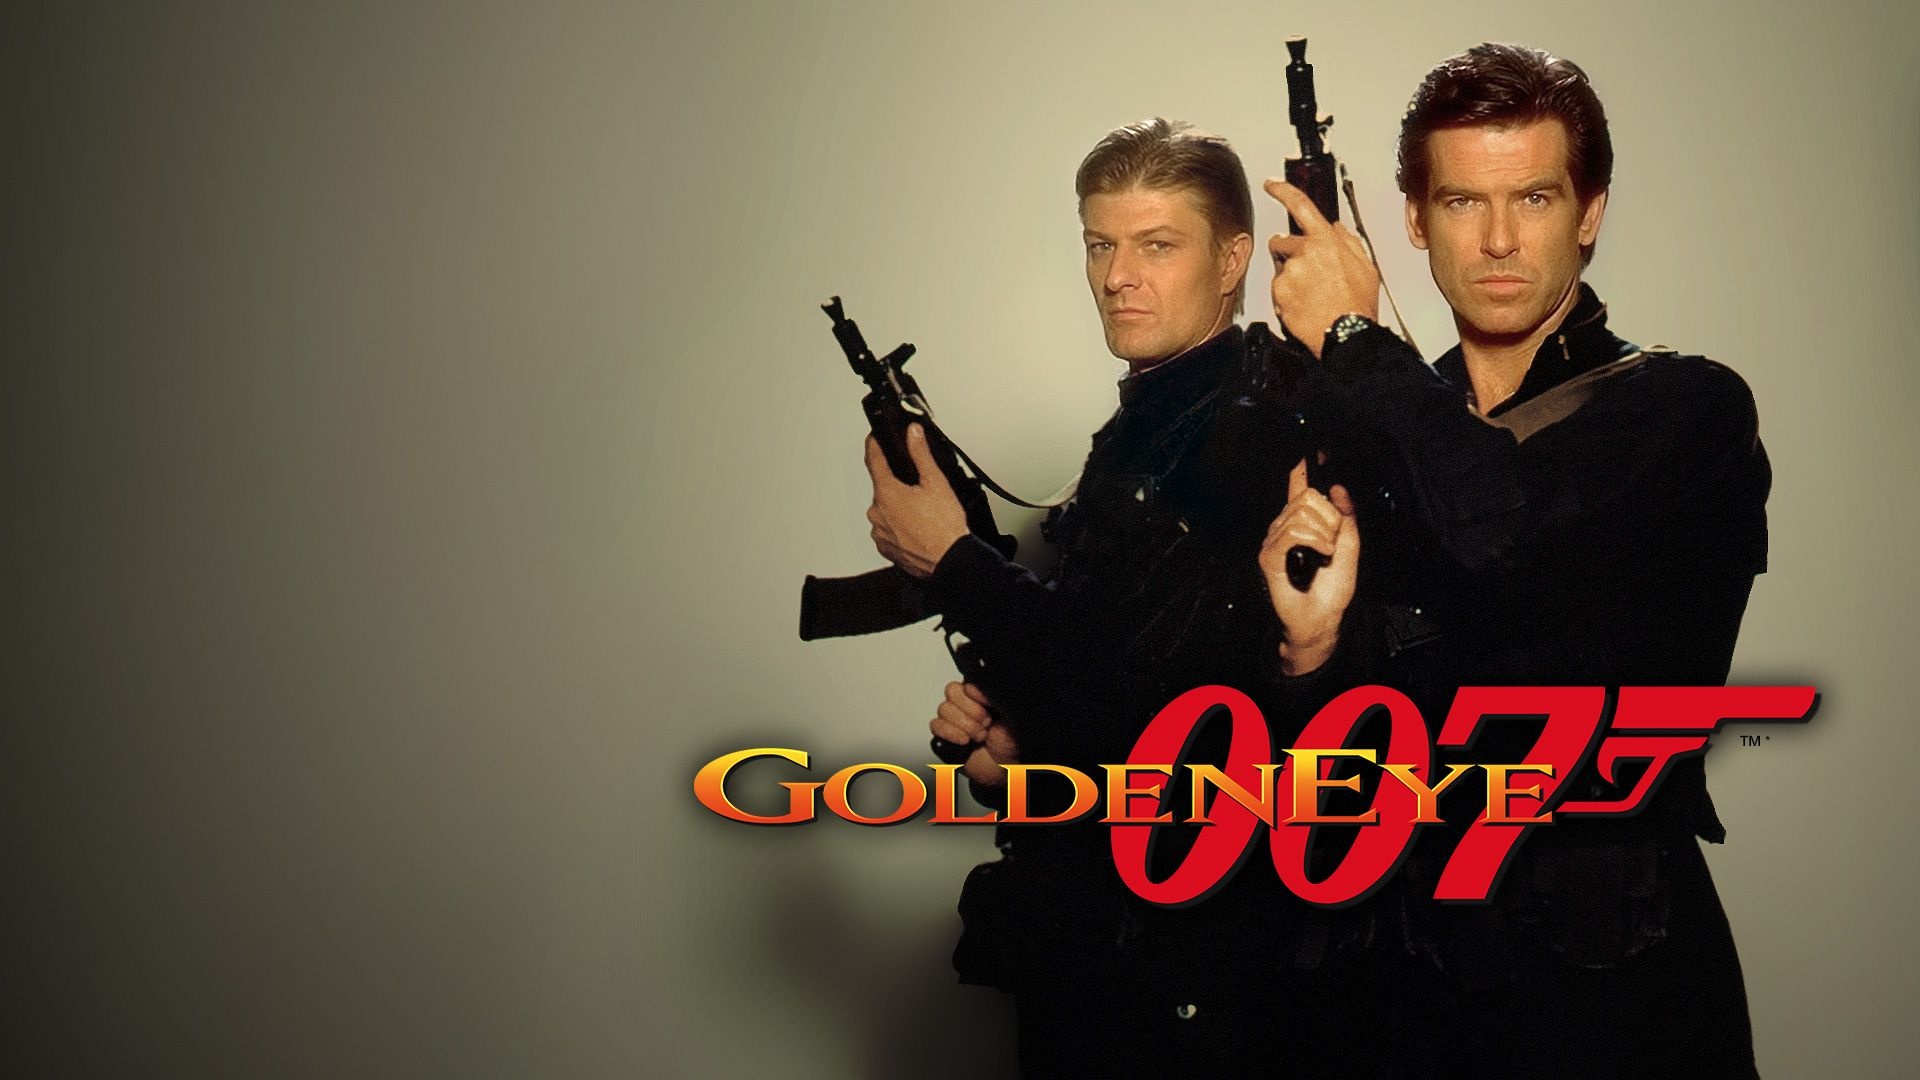 James Bond, Pierce Brosnan, Goldeneye mission, Secret agent, 1920x1080 Full HD Desktop